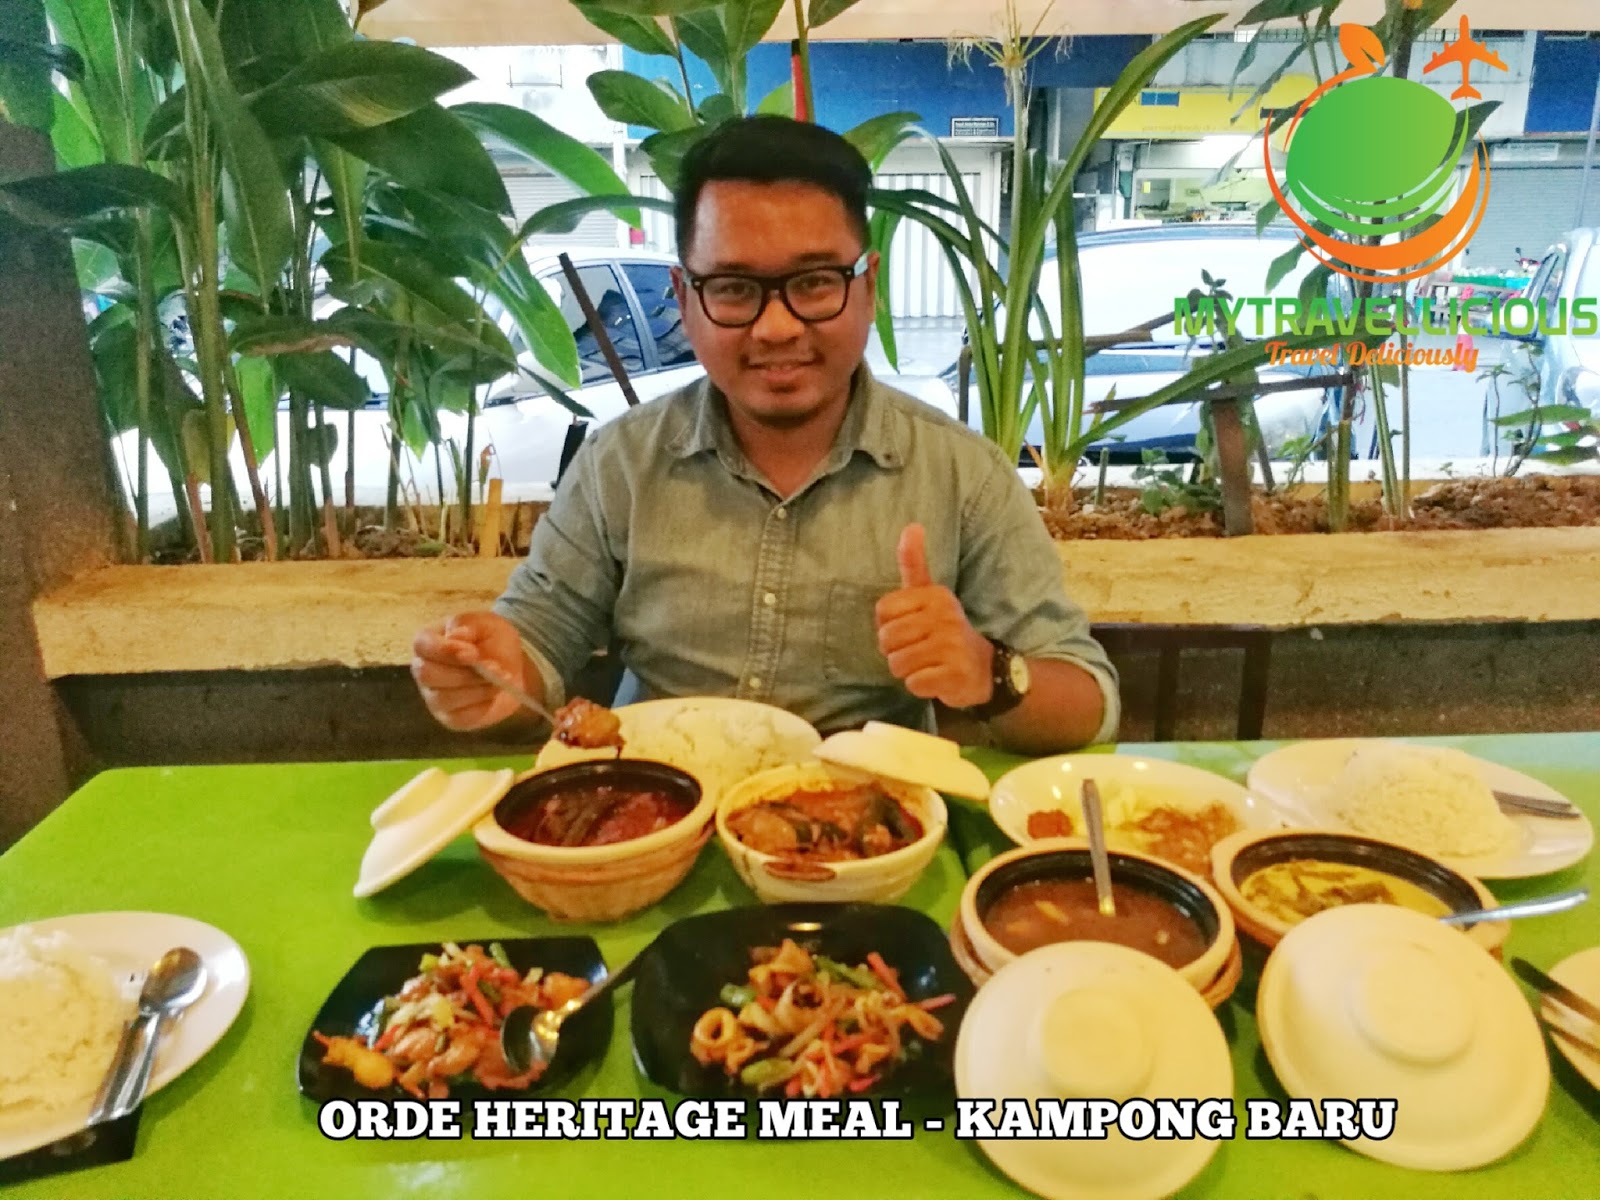 Orde Heritage Recipes Kampong Baru Asam Pedas Masak Lemak Mytravellicious Food Travel Blog Malaysia